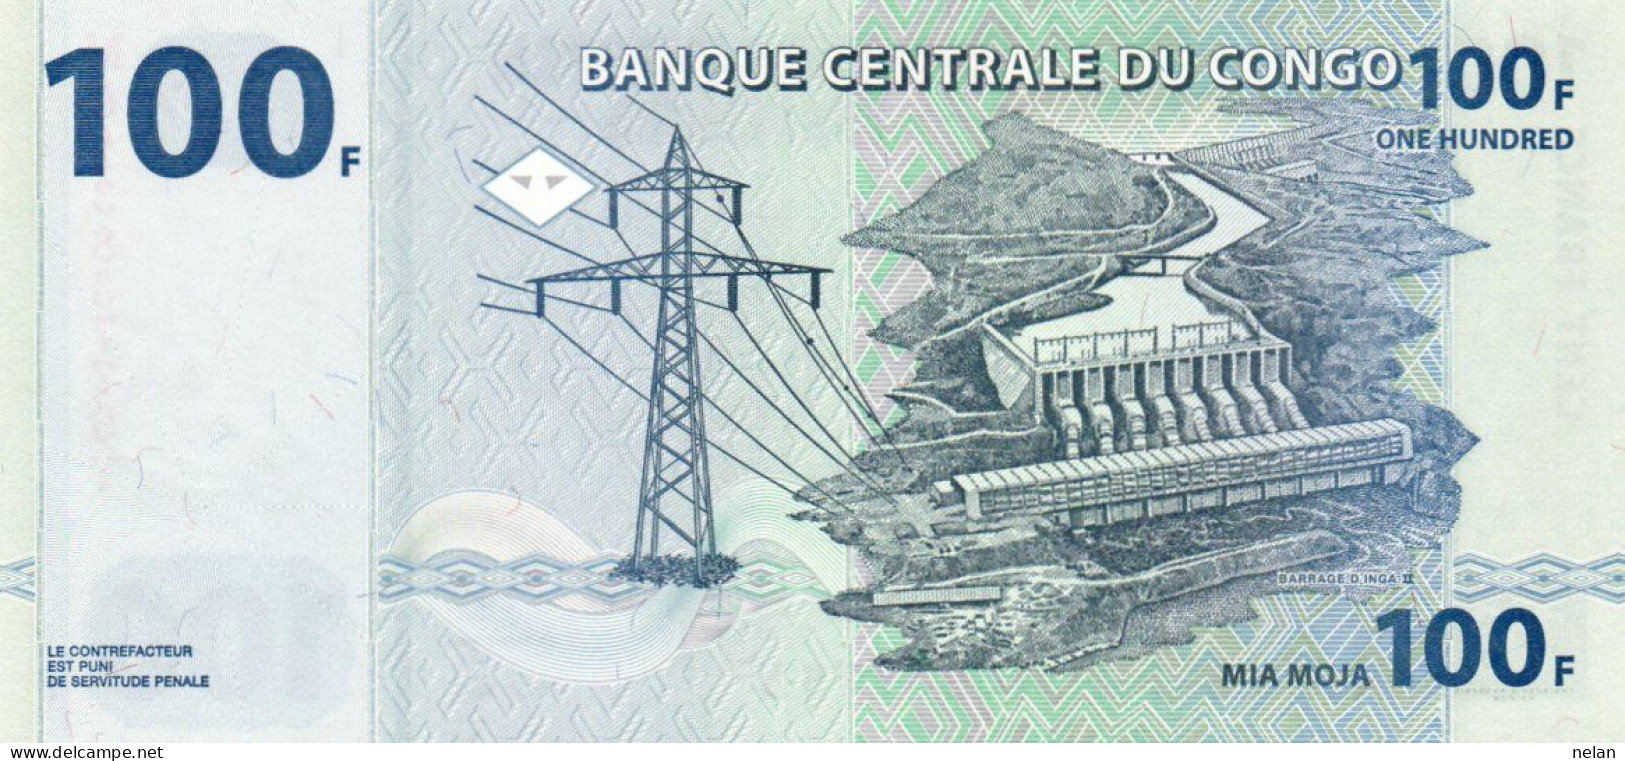 CONGO DEMOCRATIC REPUBLIC 100 FRANCS 2007 P-98a  UNC - Demokratische Republik Kongo & Zaire